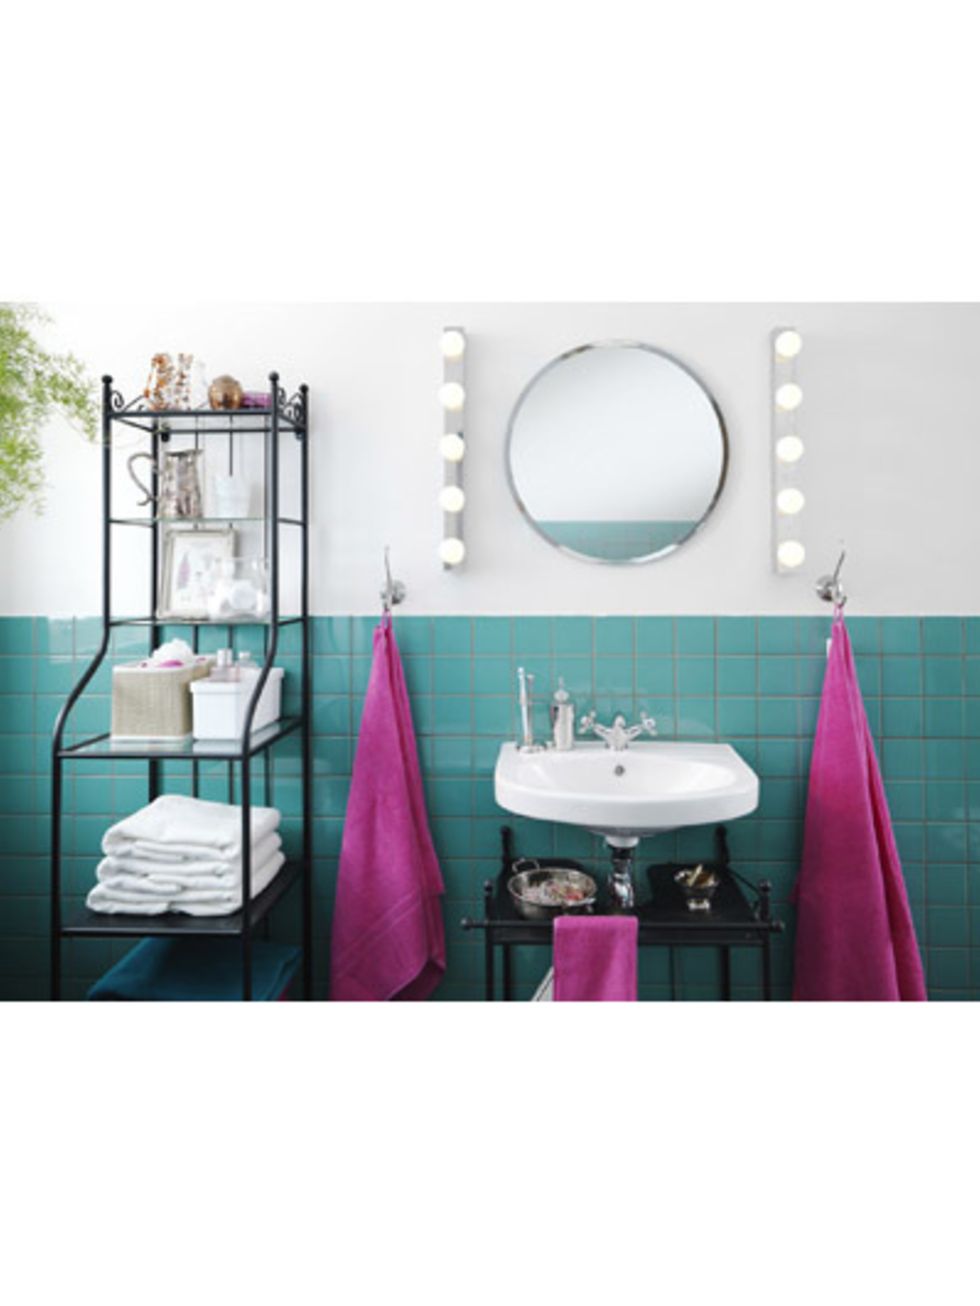 Bathroom sink, Room, Interior design, Purple, Plumbing fixture, Linens, Bathroom accessory, Sink, Mirror, Turquoise, 